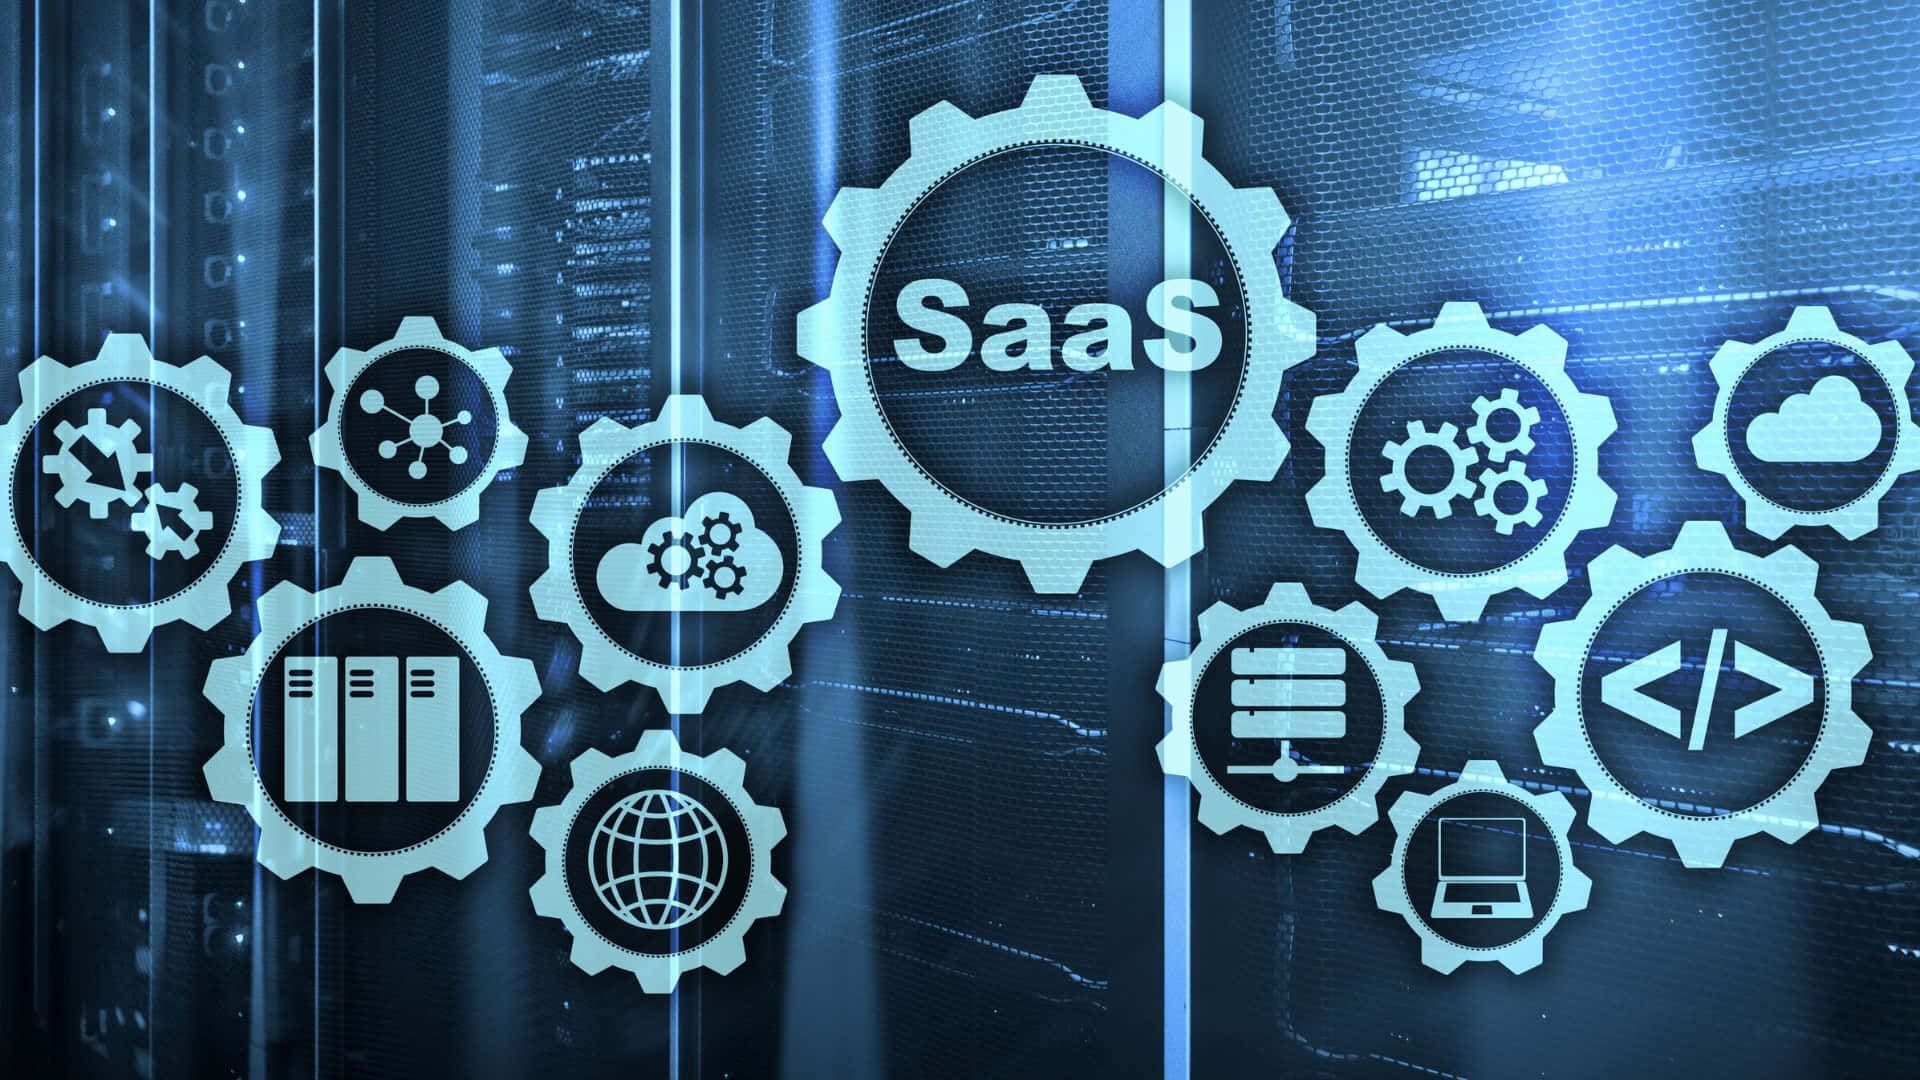 Saa S Softwareasa Service Concept Wallpaper